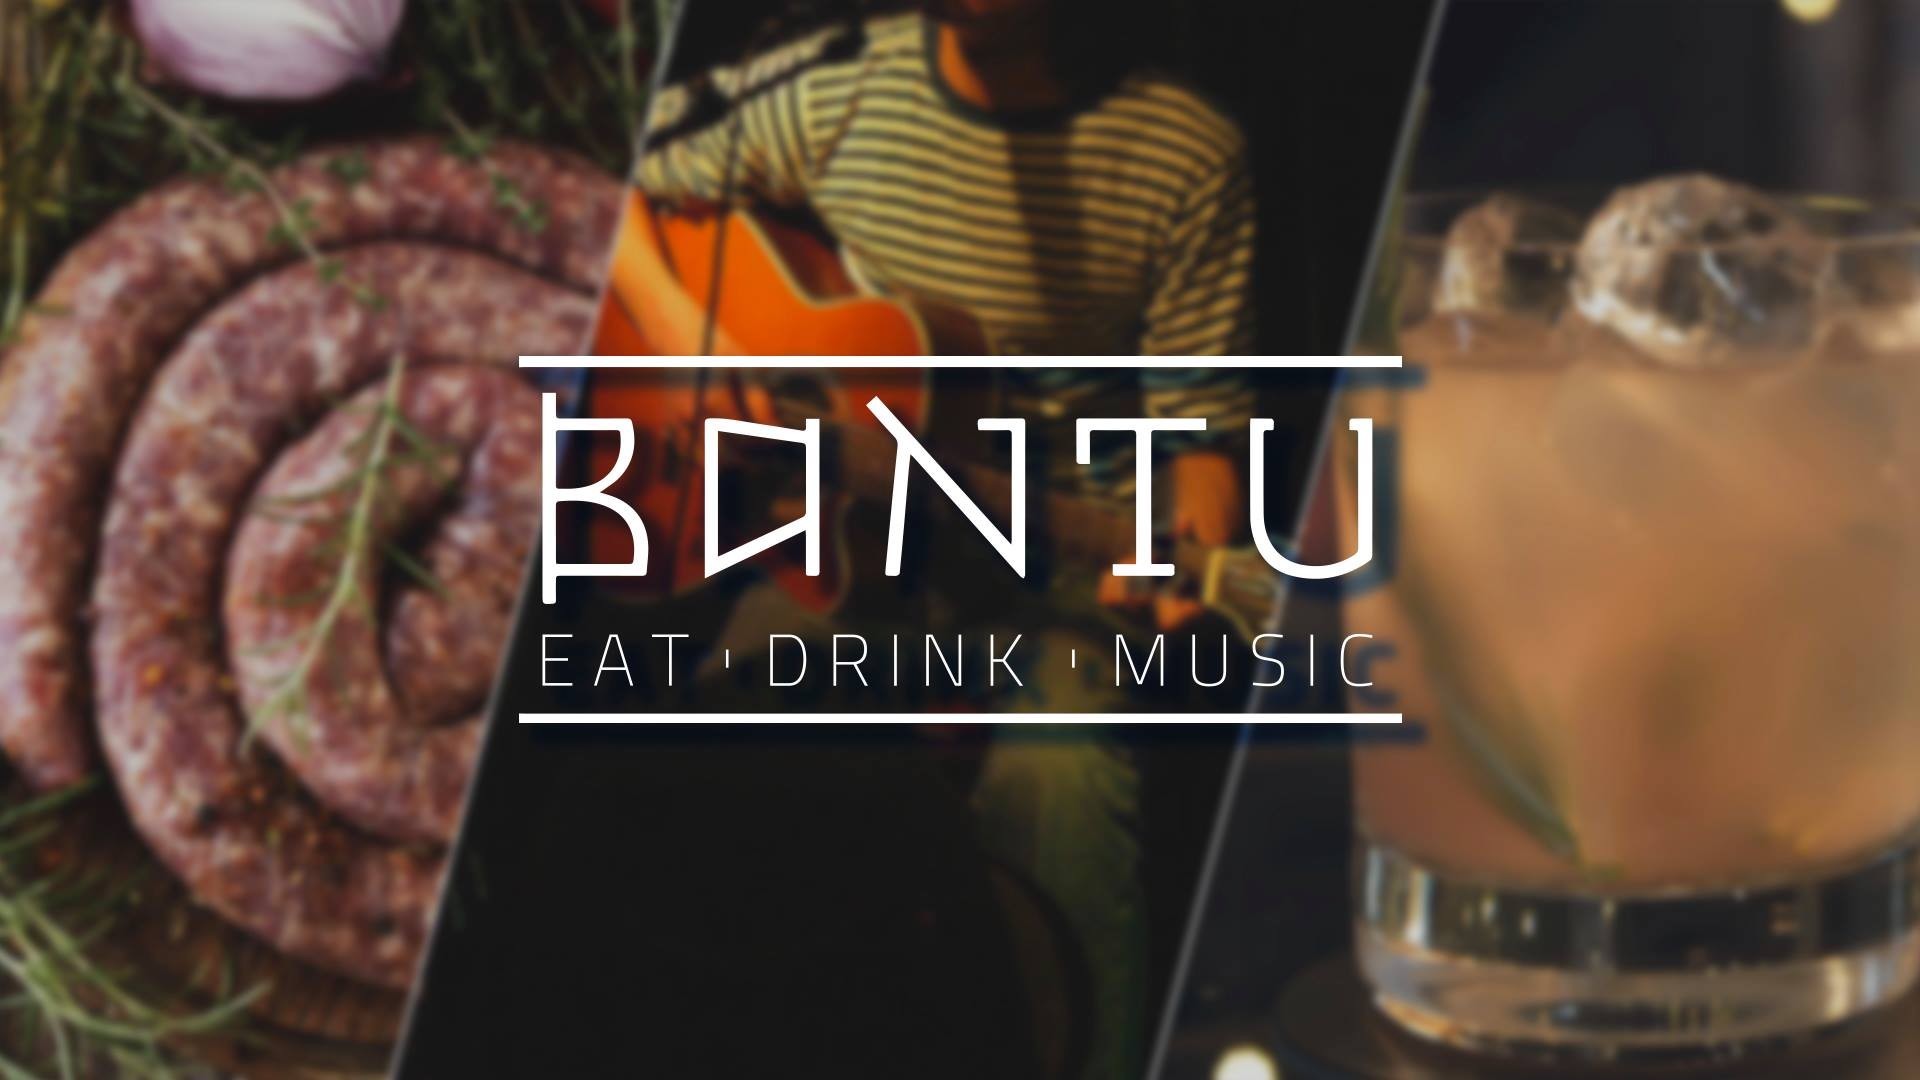 Bantu Birmingham - Best African Restaurant